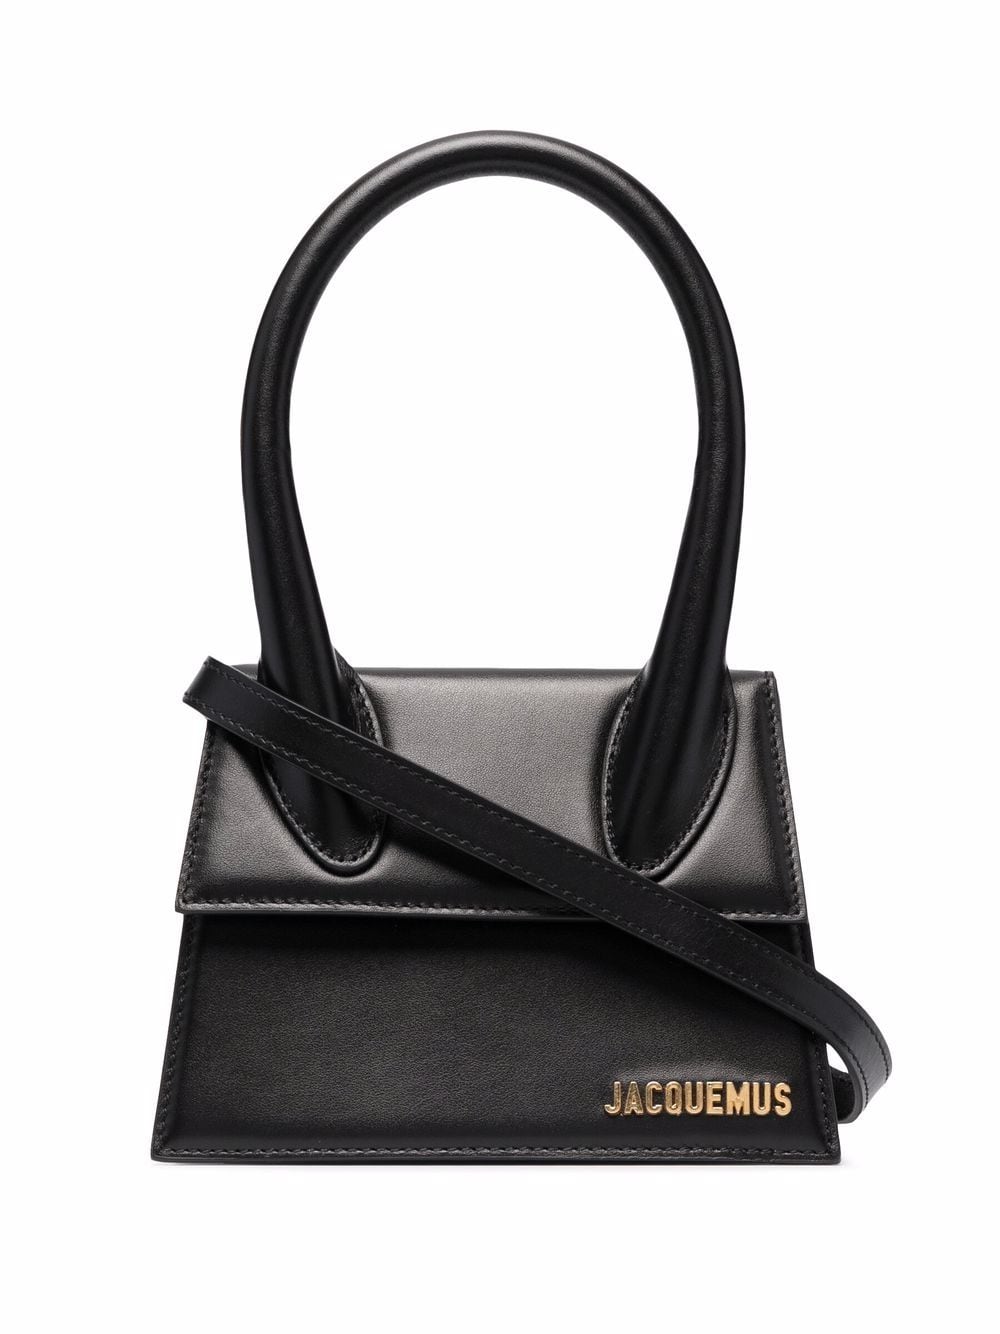 JACQUEMUS Black Leather Mini Tote Bag for Women in FW23 Season